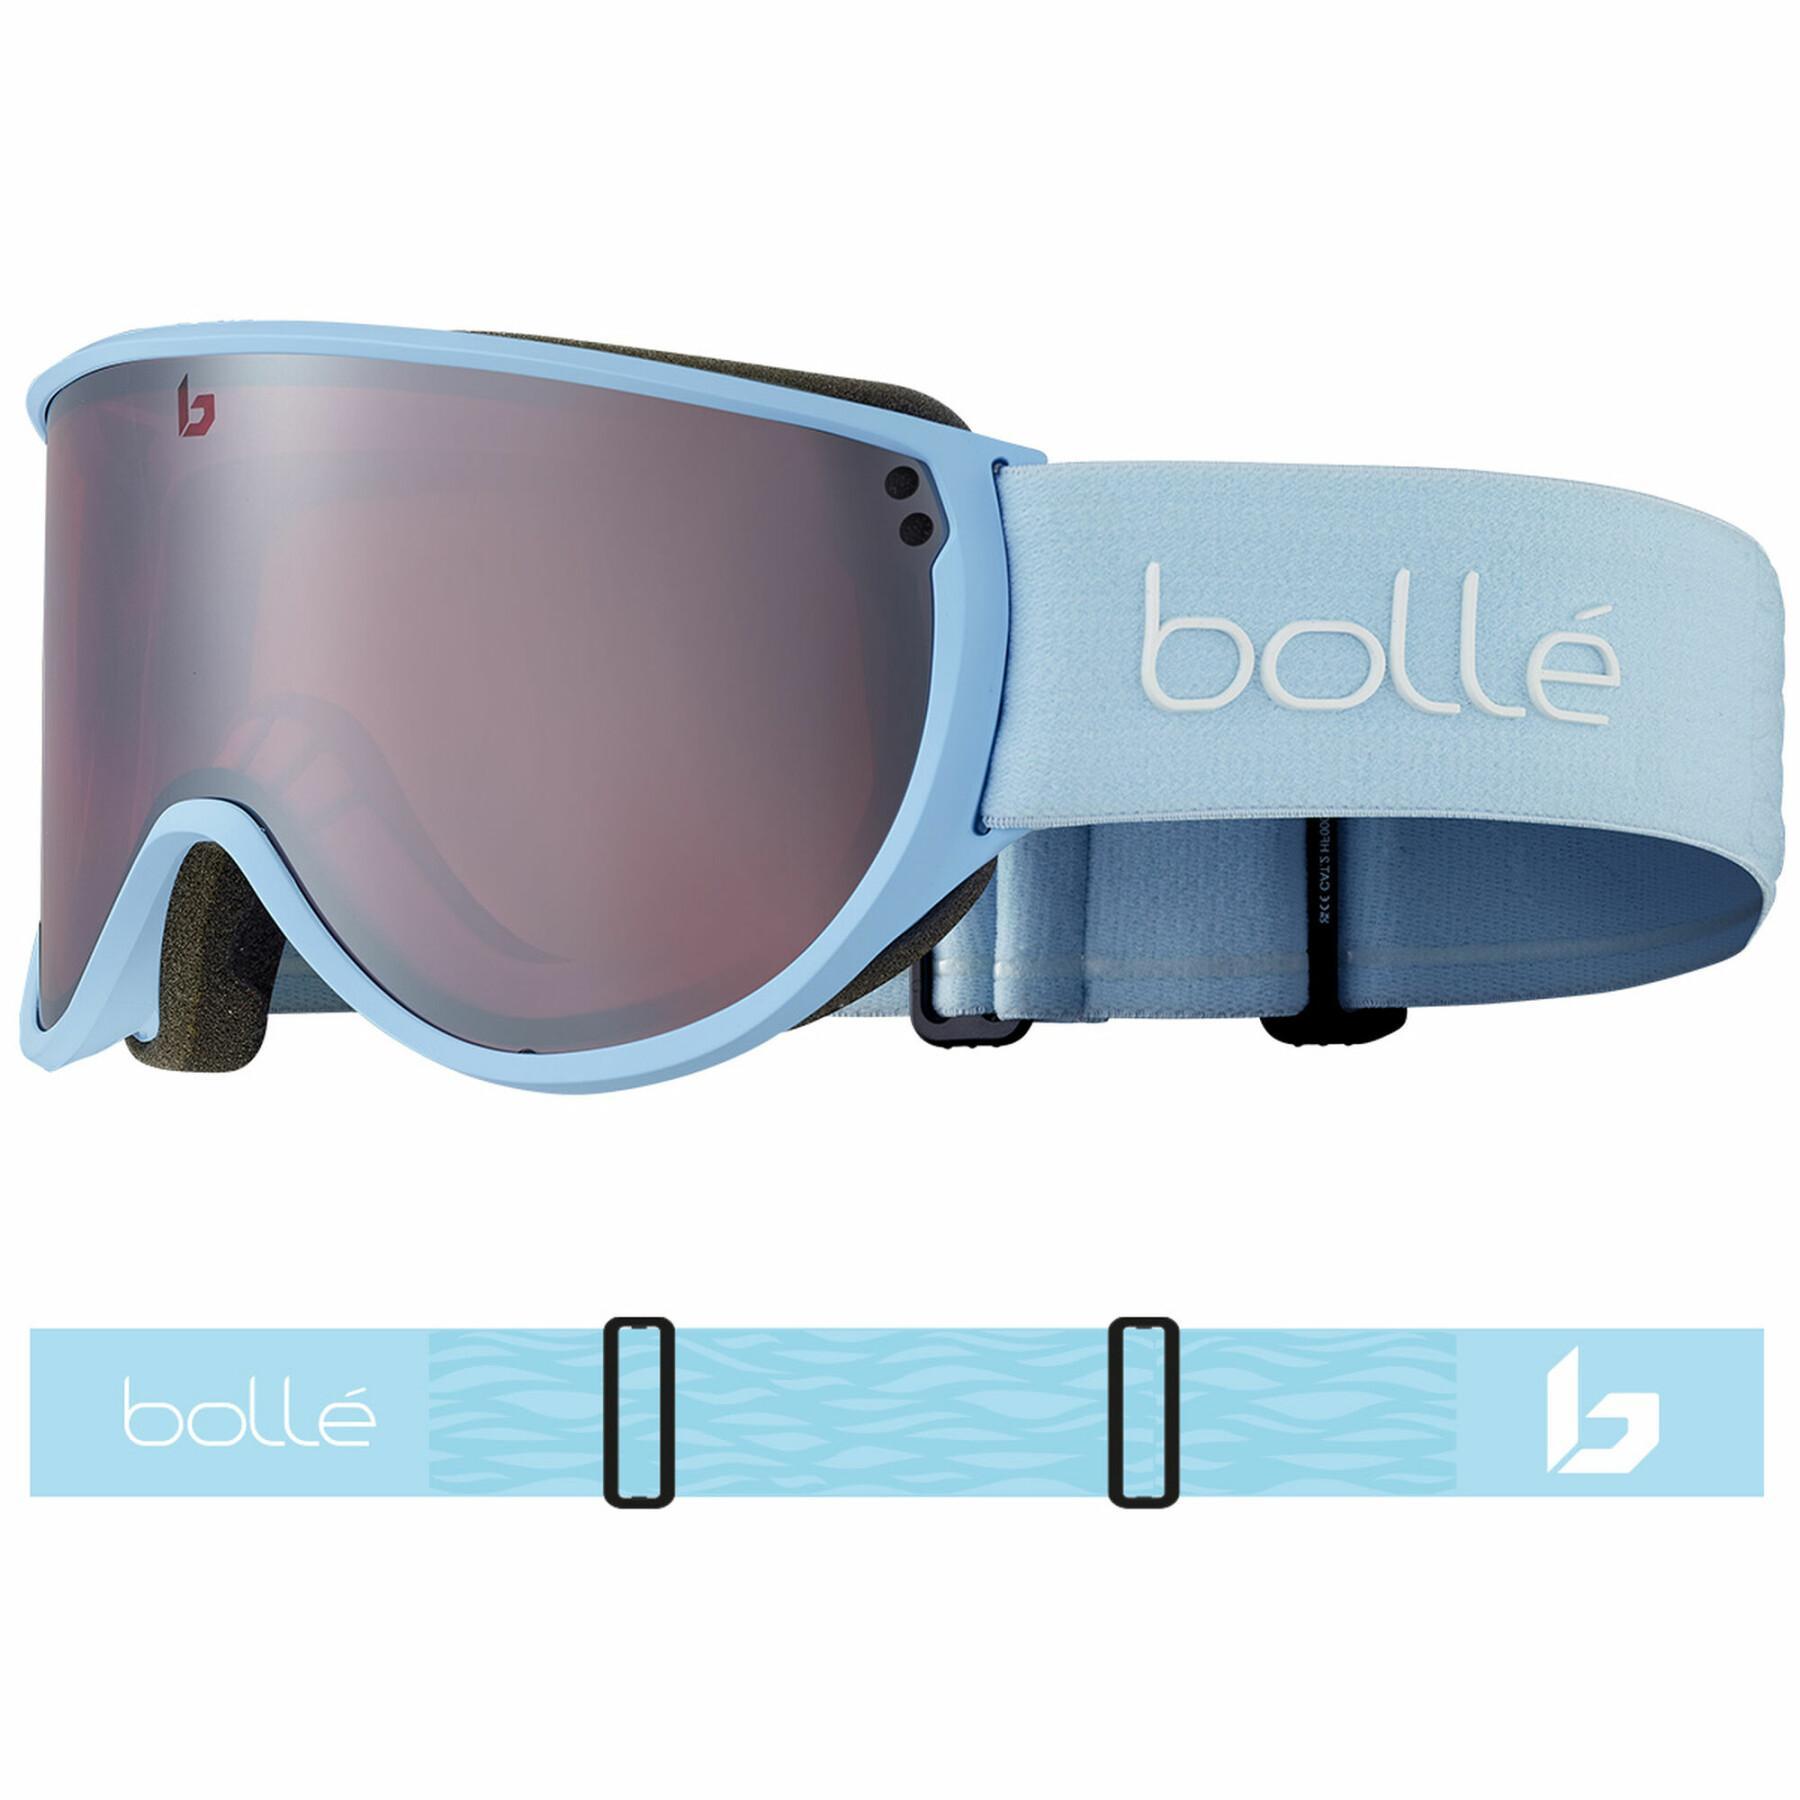 Women's ski mask Bollé Blanca